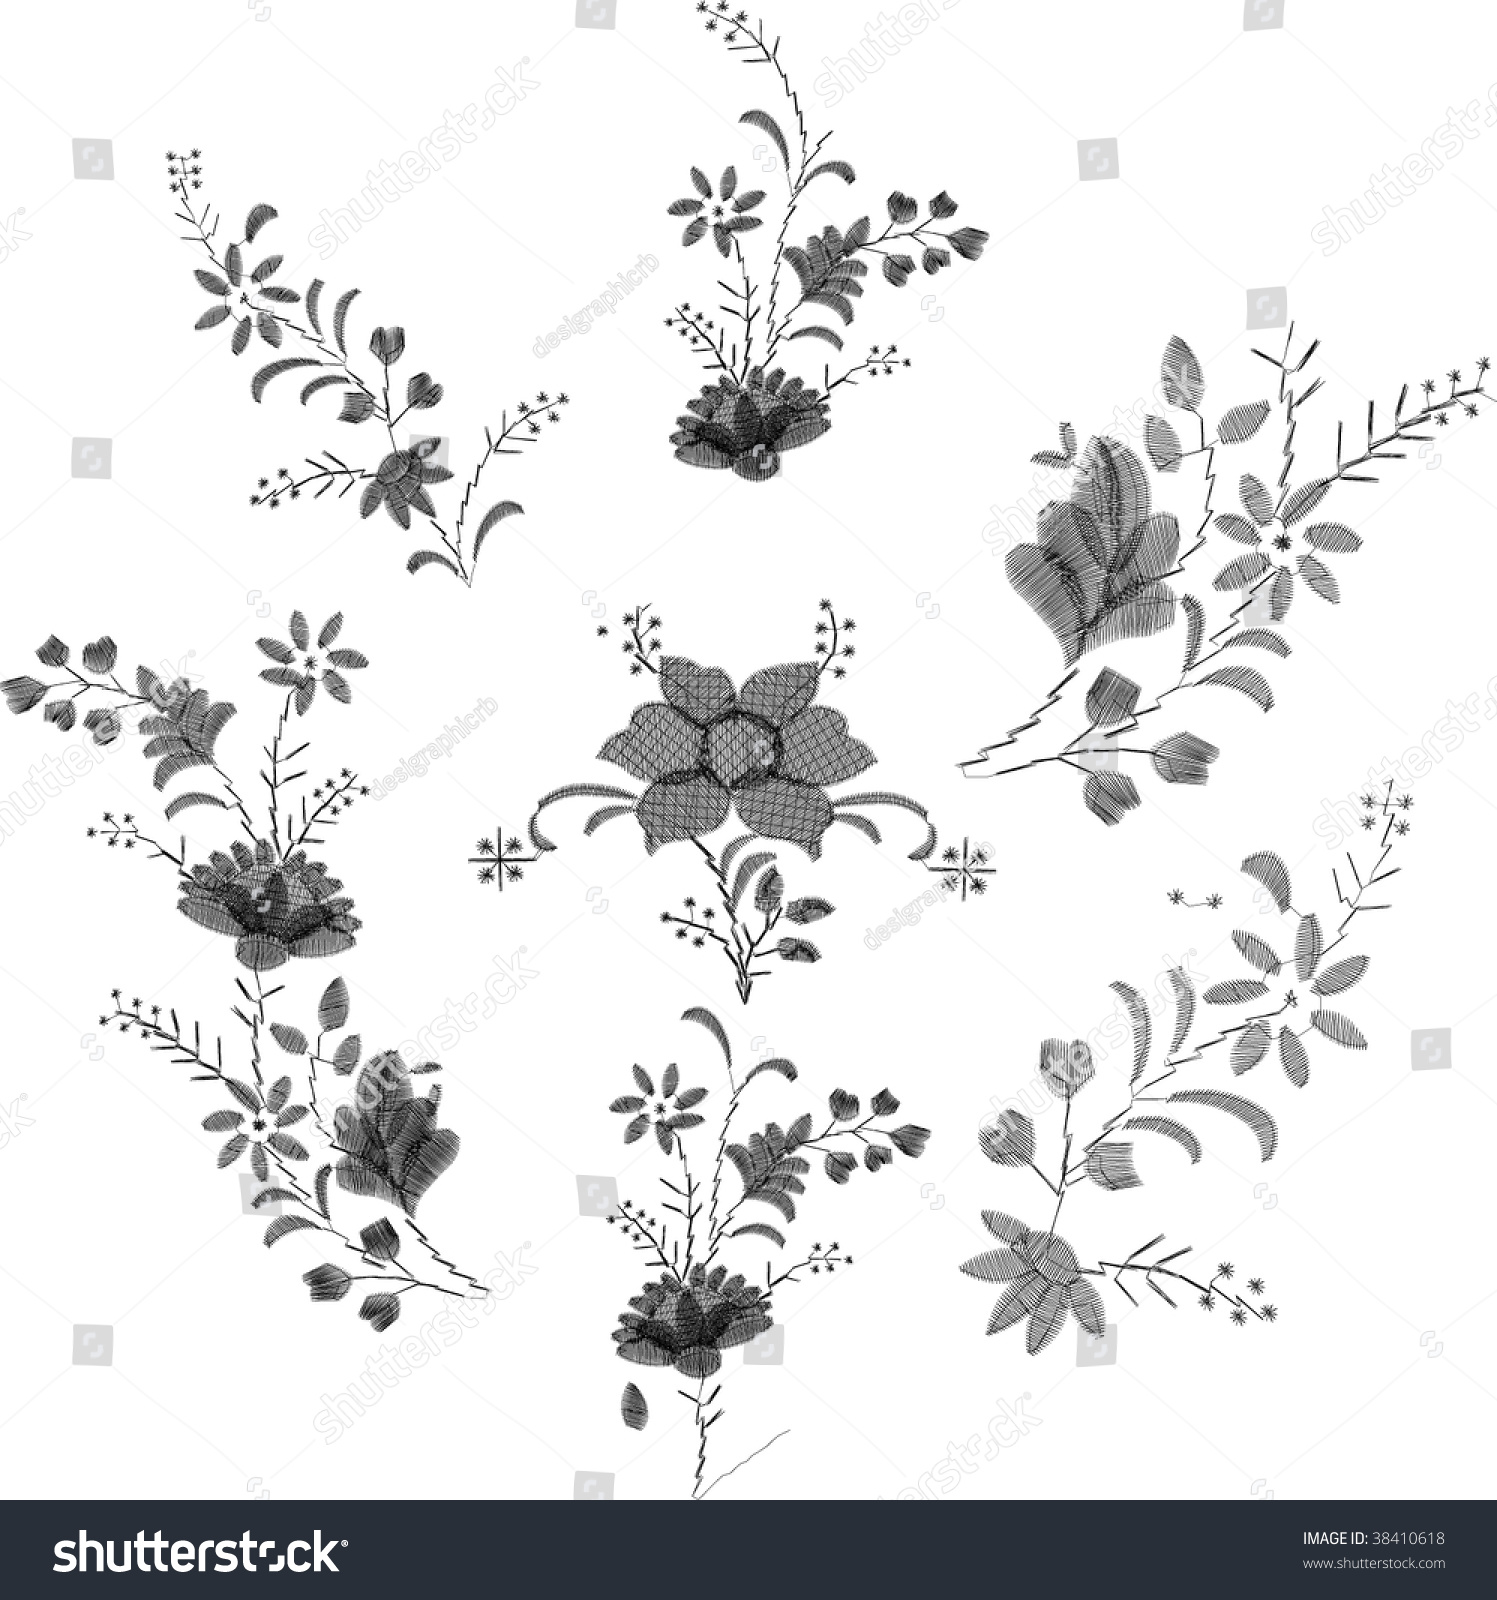 Embroidery Flower Stock Vector 38410618 - Shutterstock